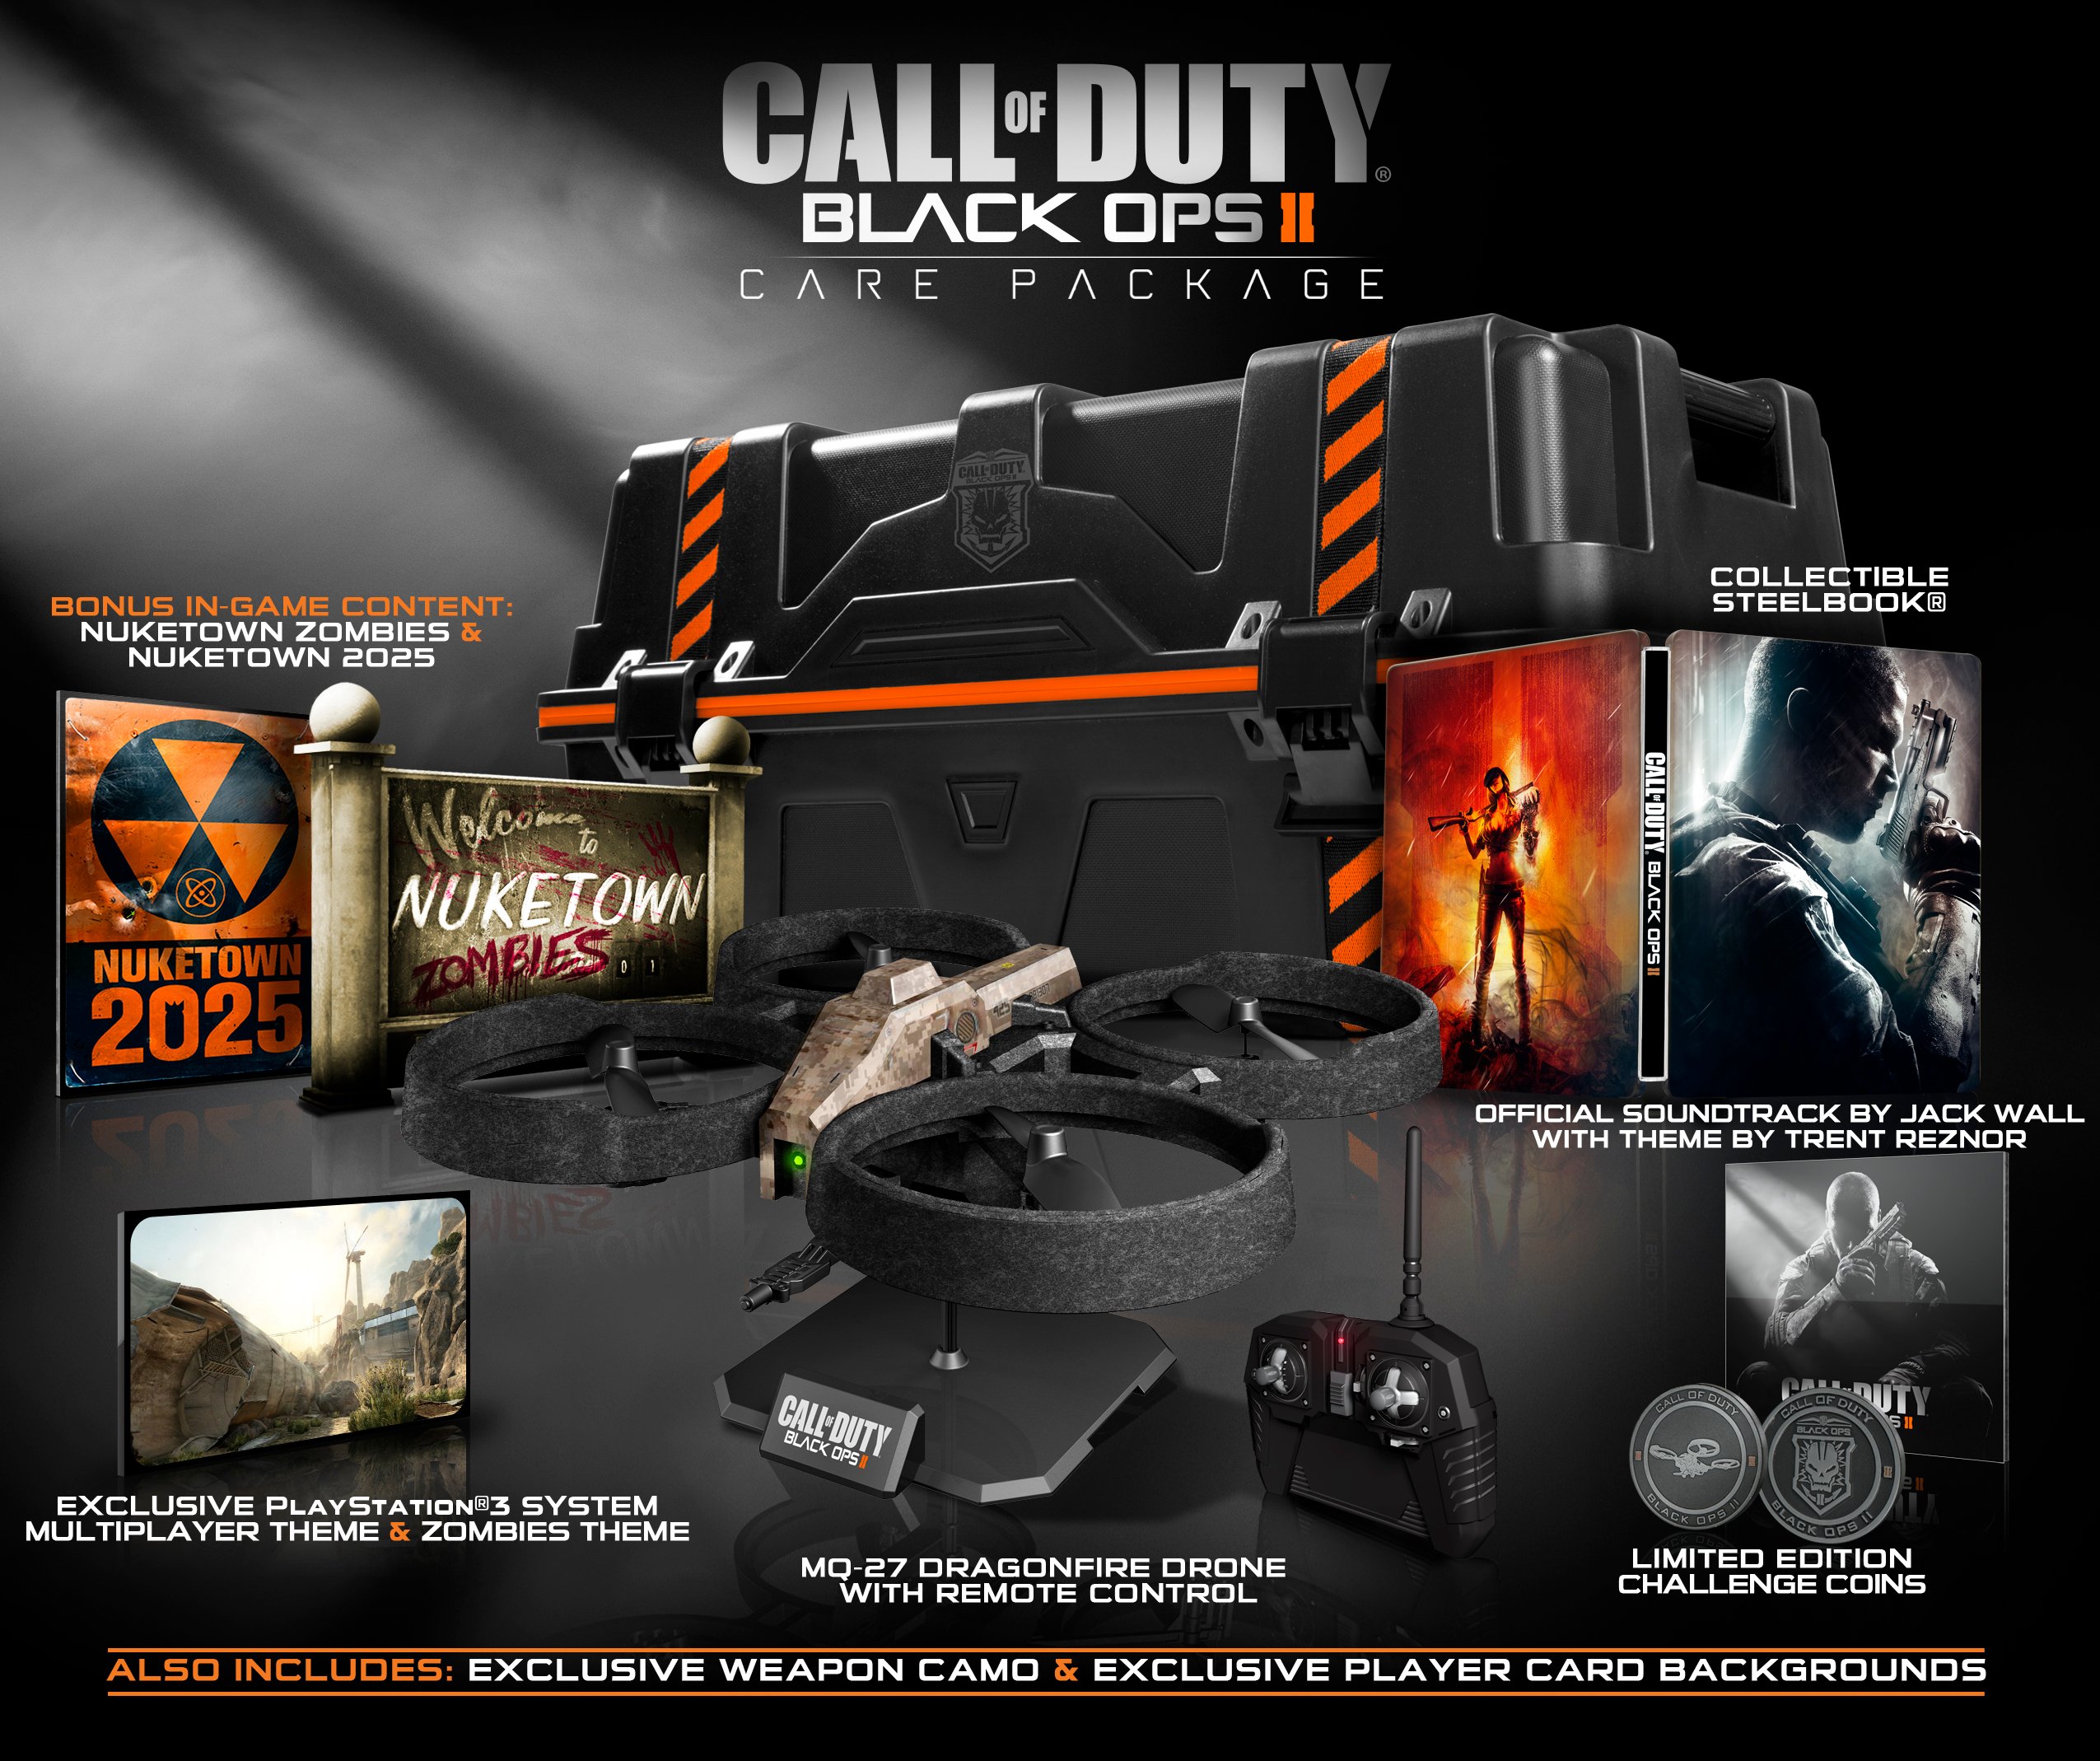 Buy Call of Duty Black Ops II (2) Care Package